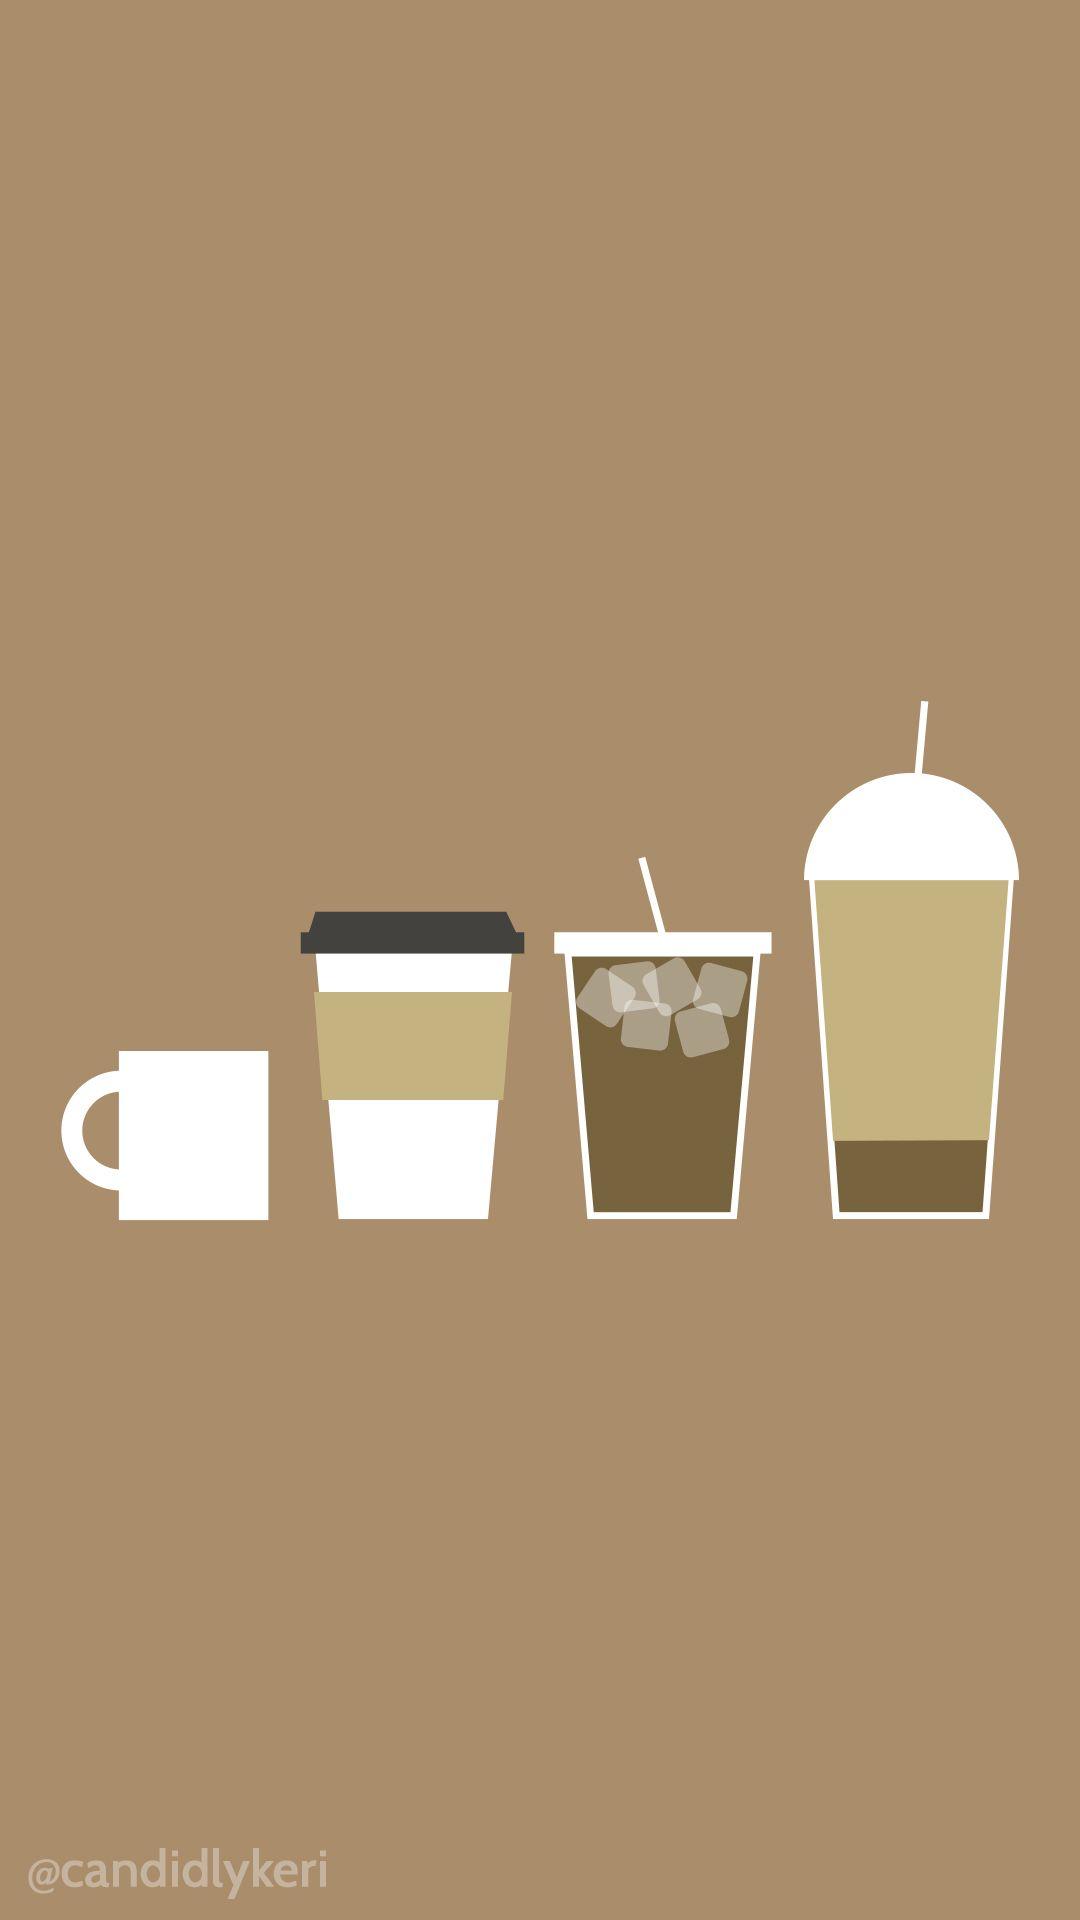 Cute cartoon coffee, latte, iced coffee wallpaper you can